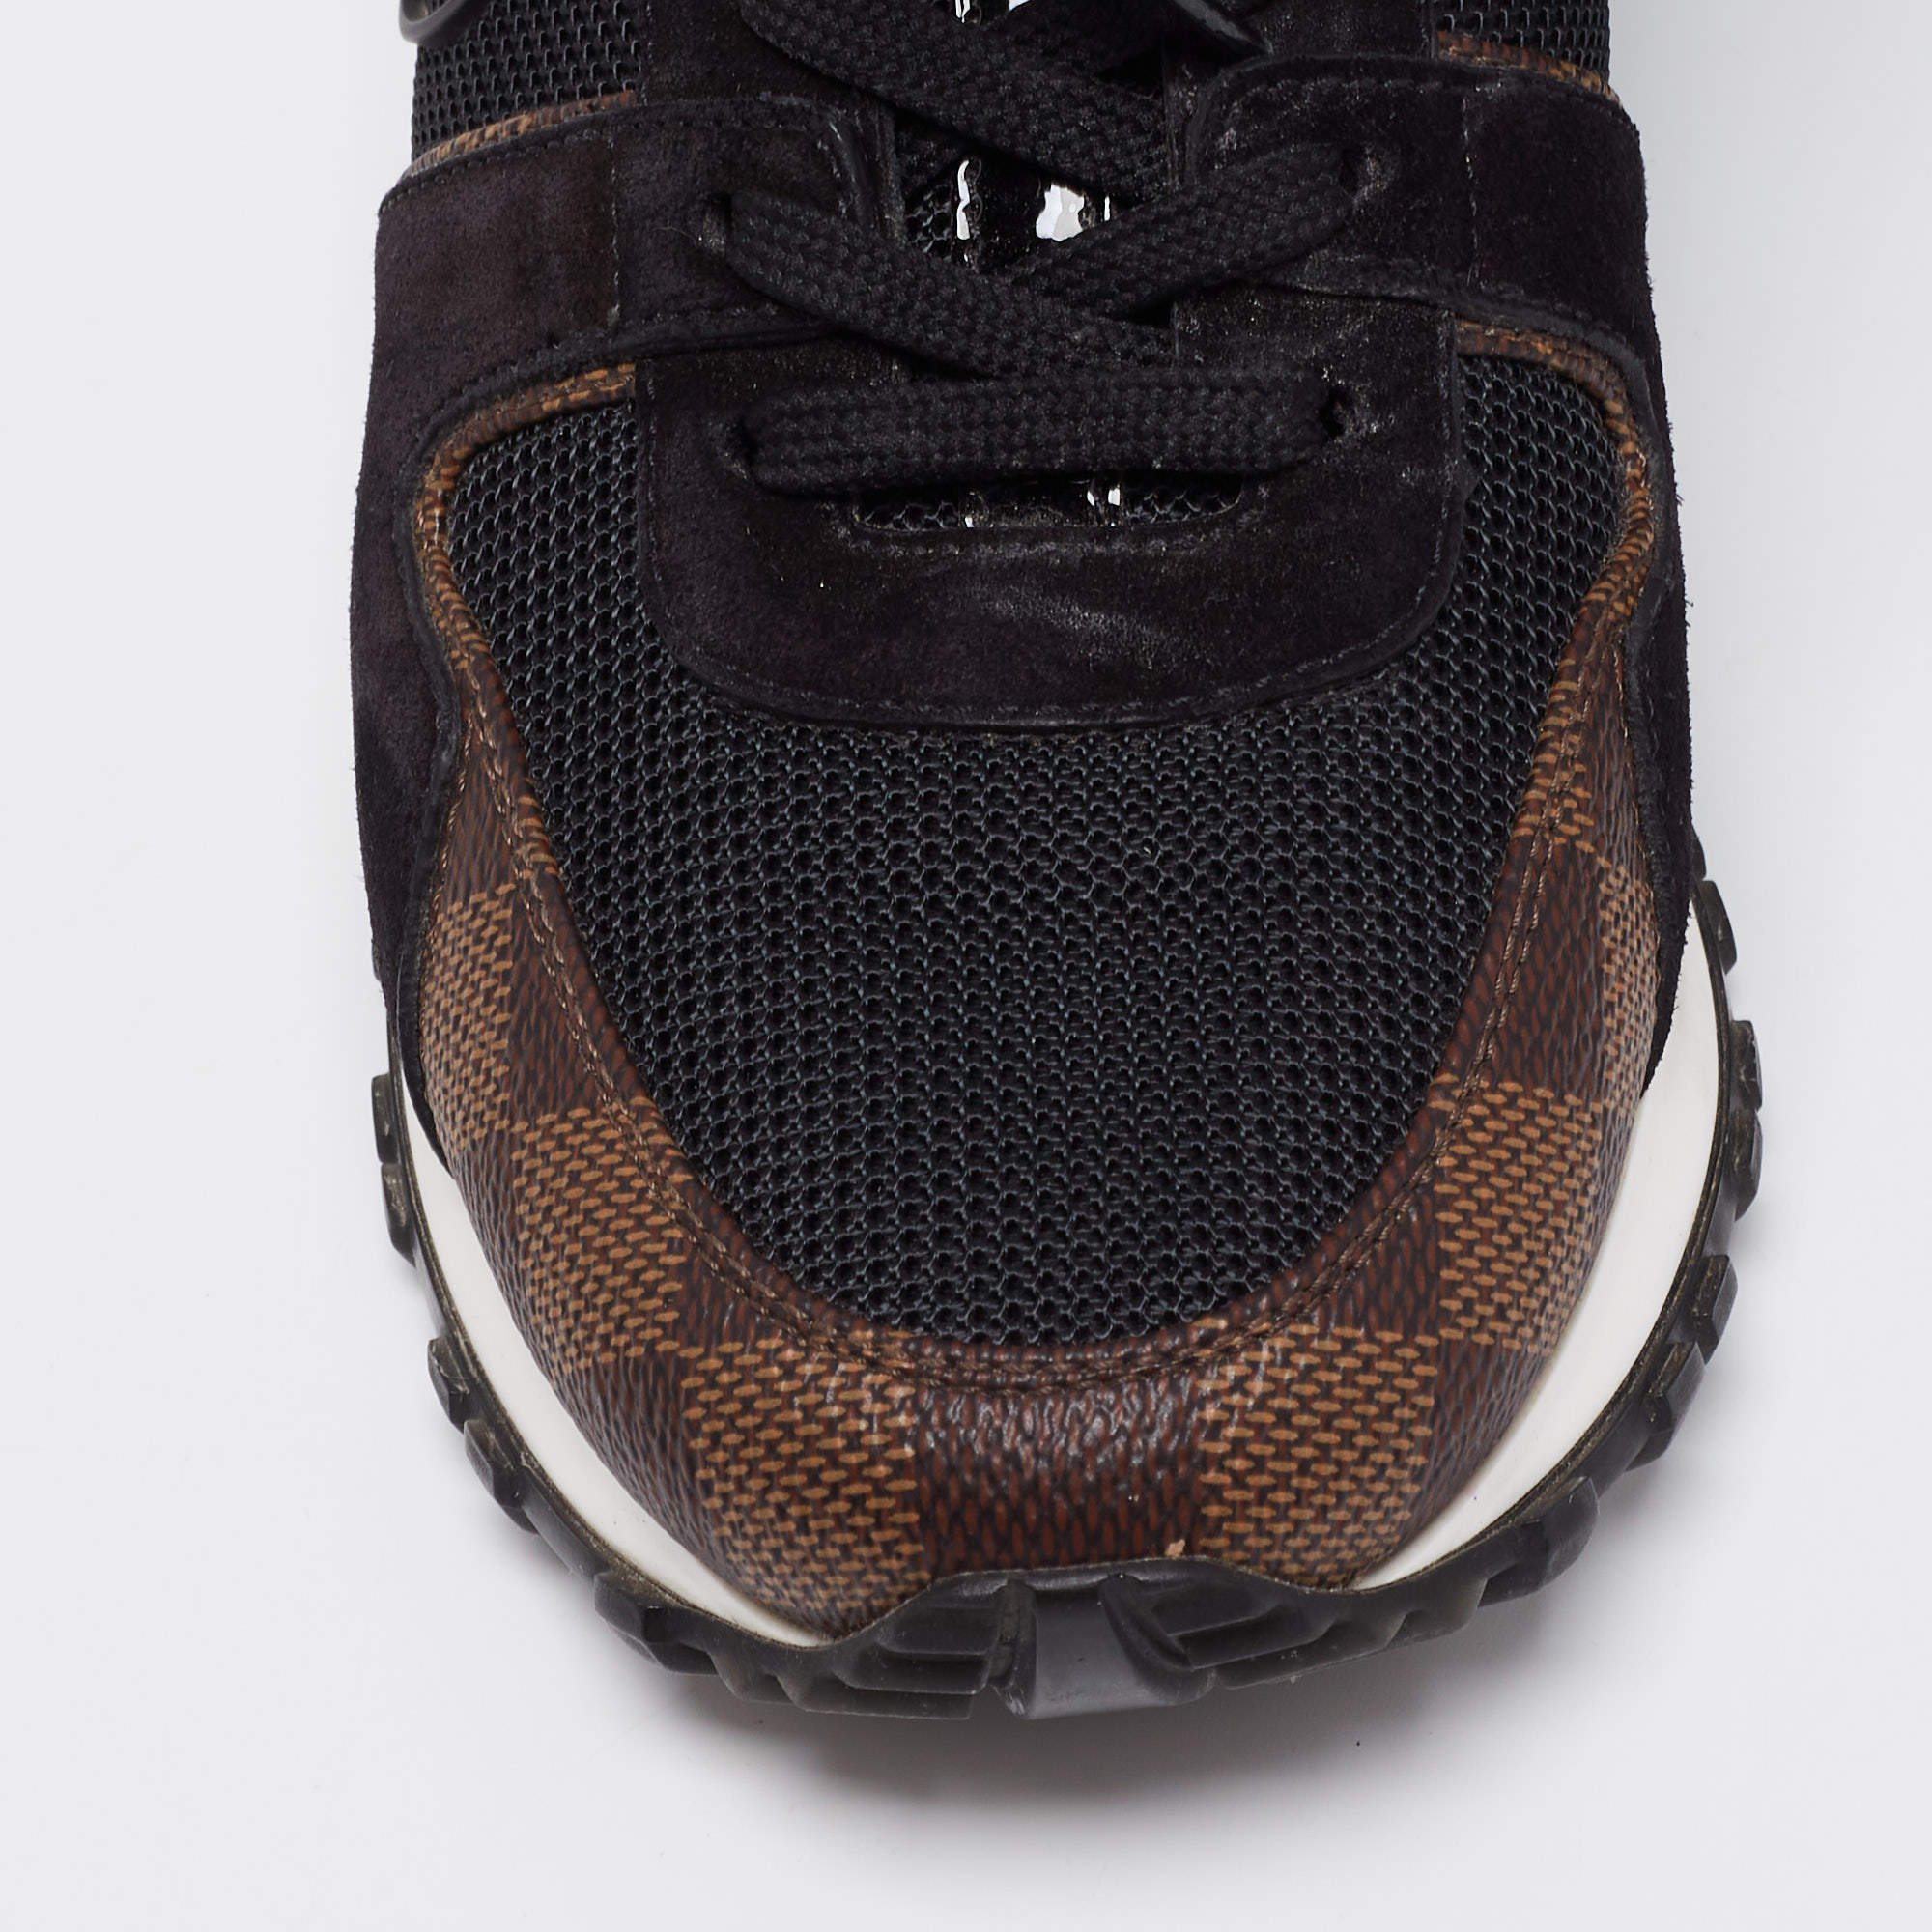 Louis Vuitton Black/Brown Suede And Damier Ebene Canvas Run Away Sneakers  Size 38 Louis Vuitton